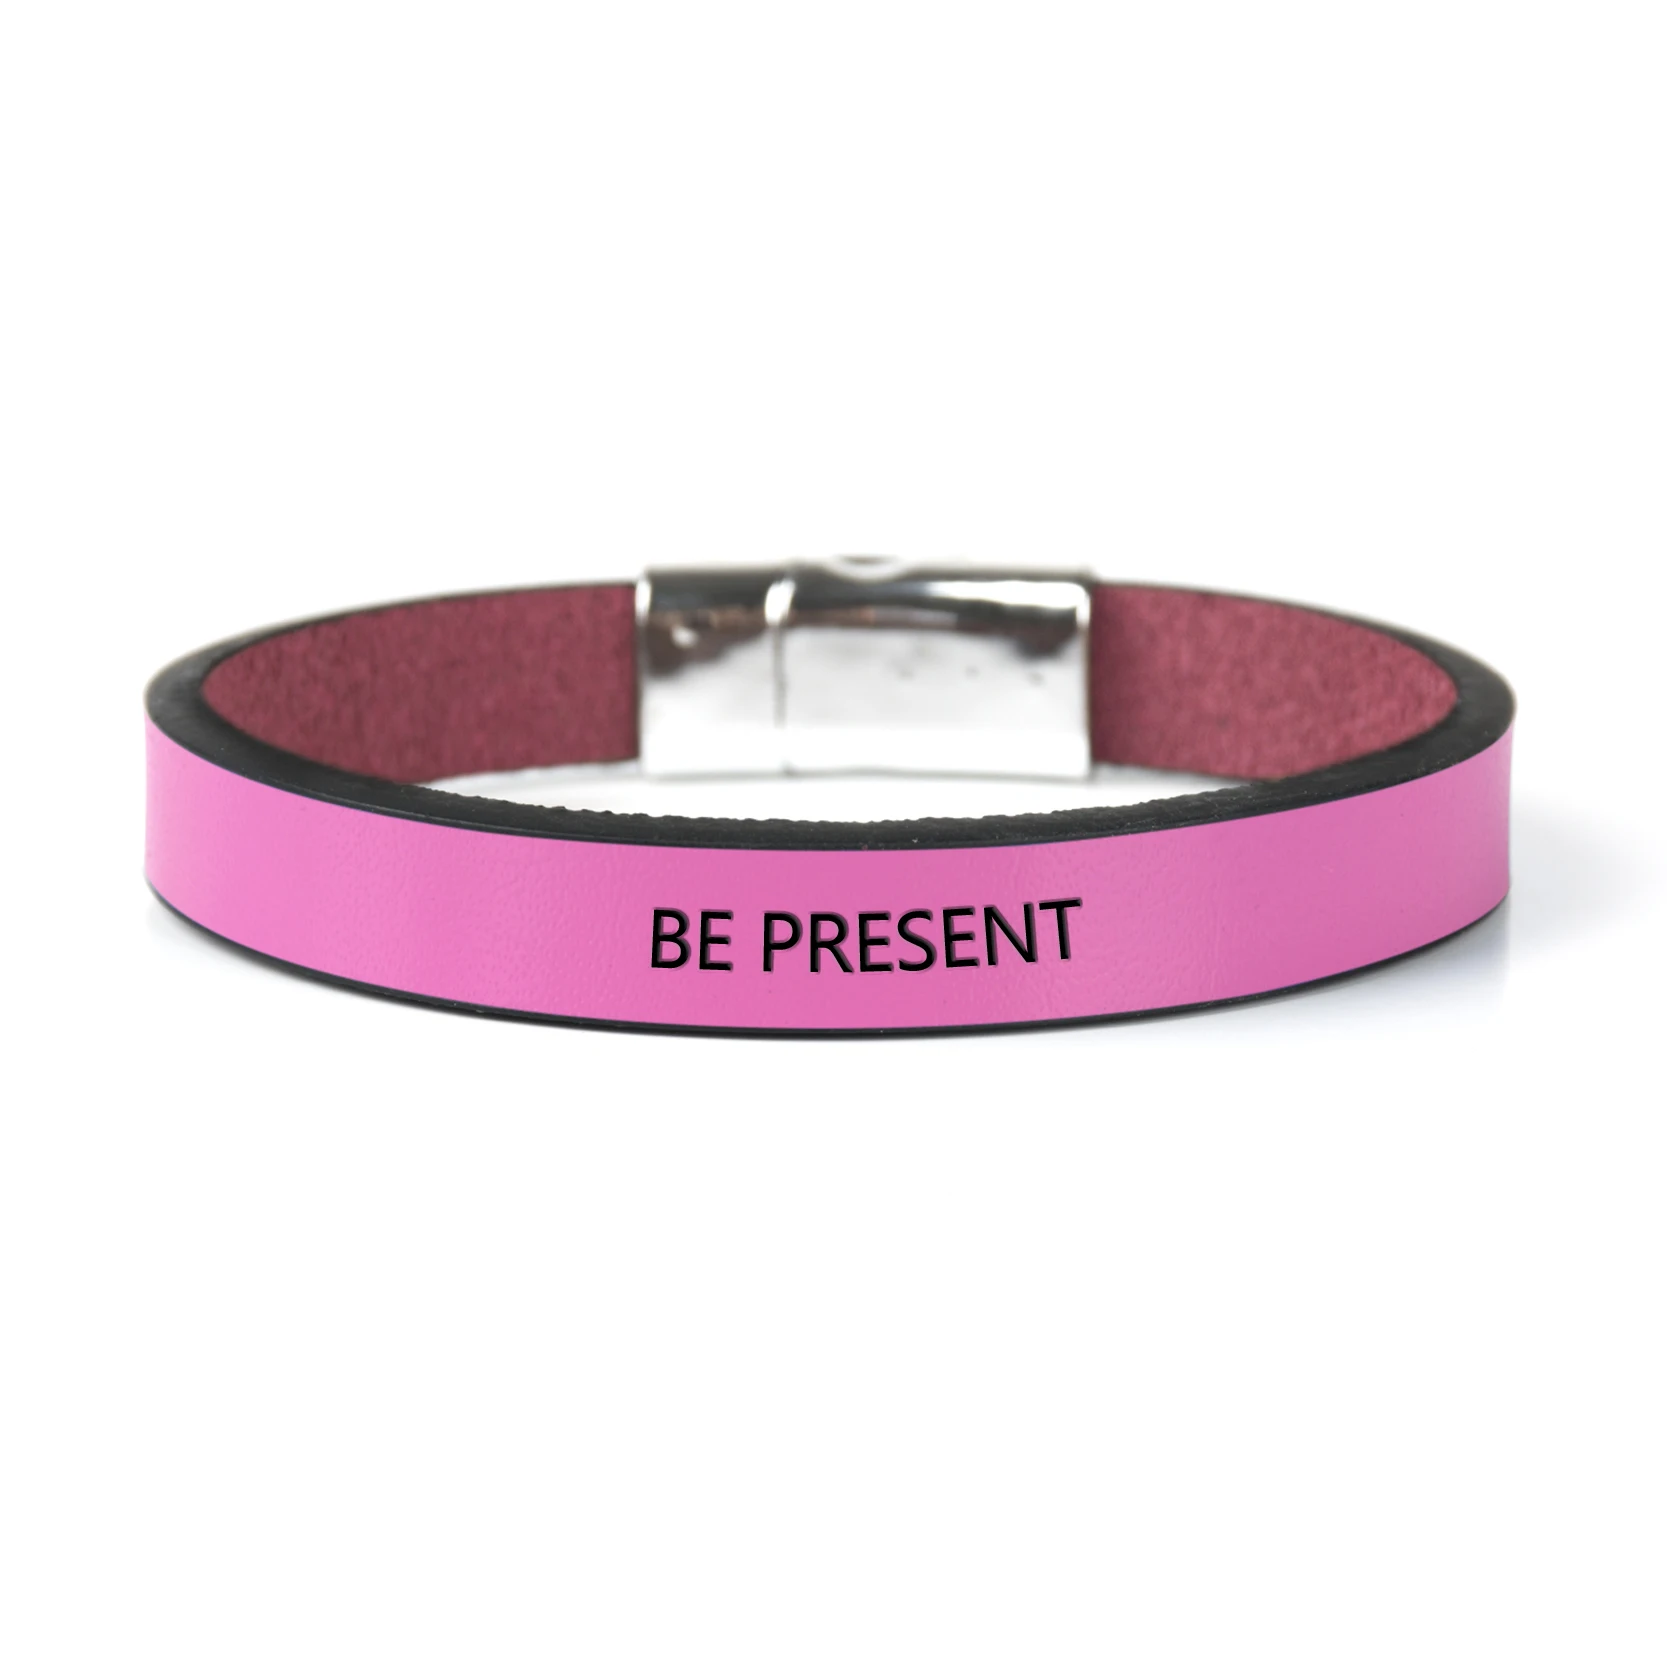 BE PRESENT кожаный браслет сообщение манжеты браслеты для женщин мужчин кнопки браслет с мантрой манжеты ручной цепи - Окраска металла: Pink